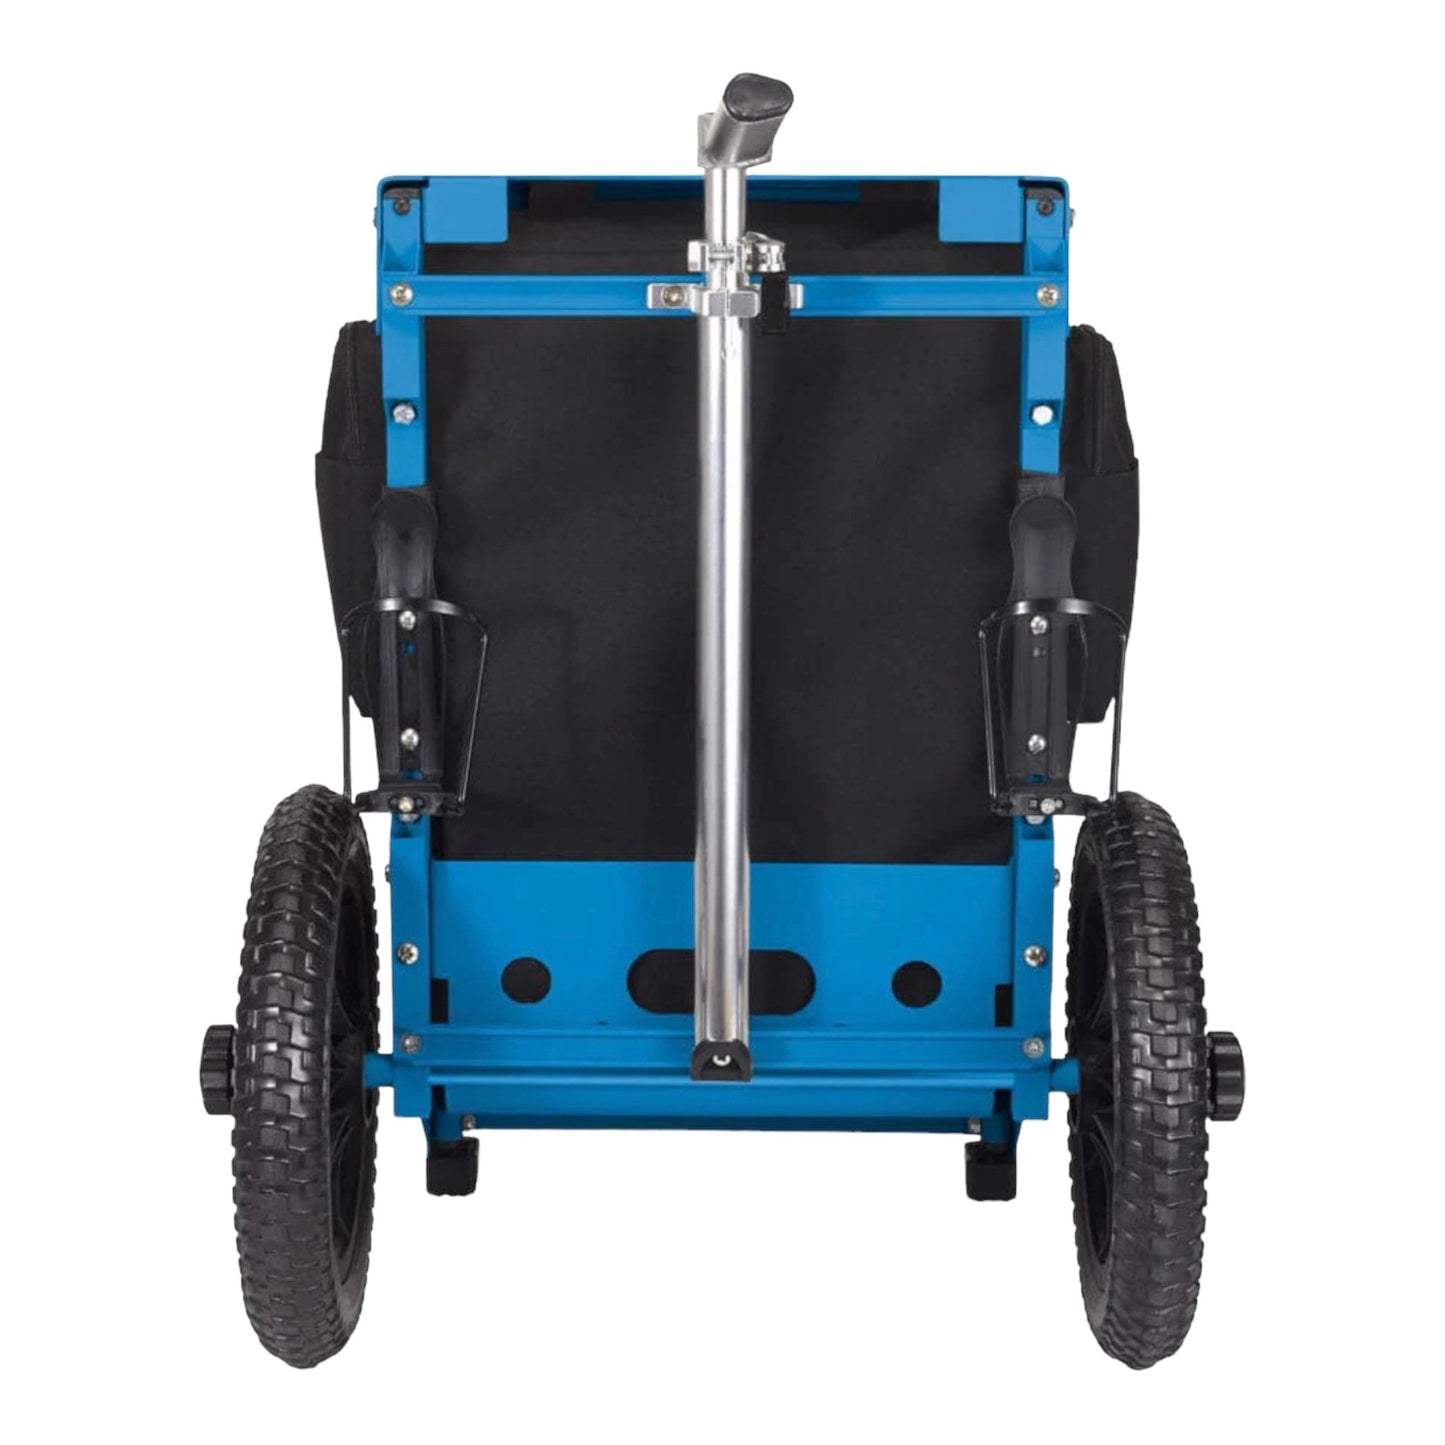 Zuca Backpack Cart Trekker | Blue Frame with Black Bag Disc Golf